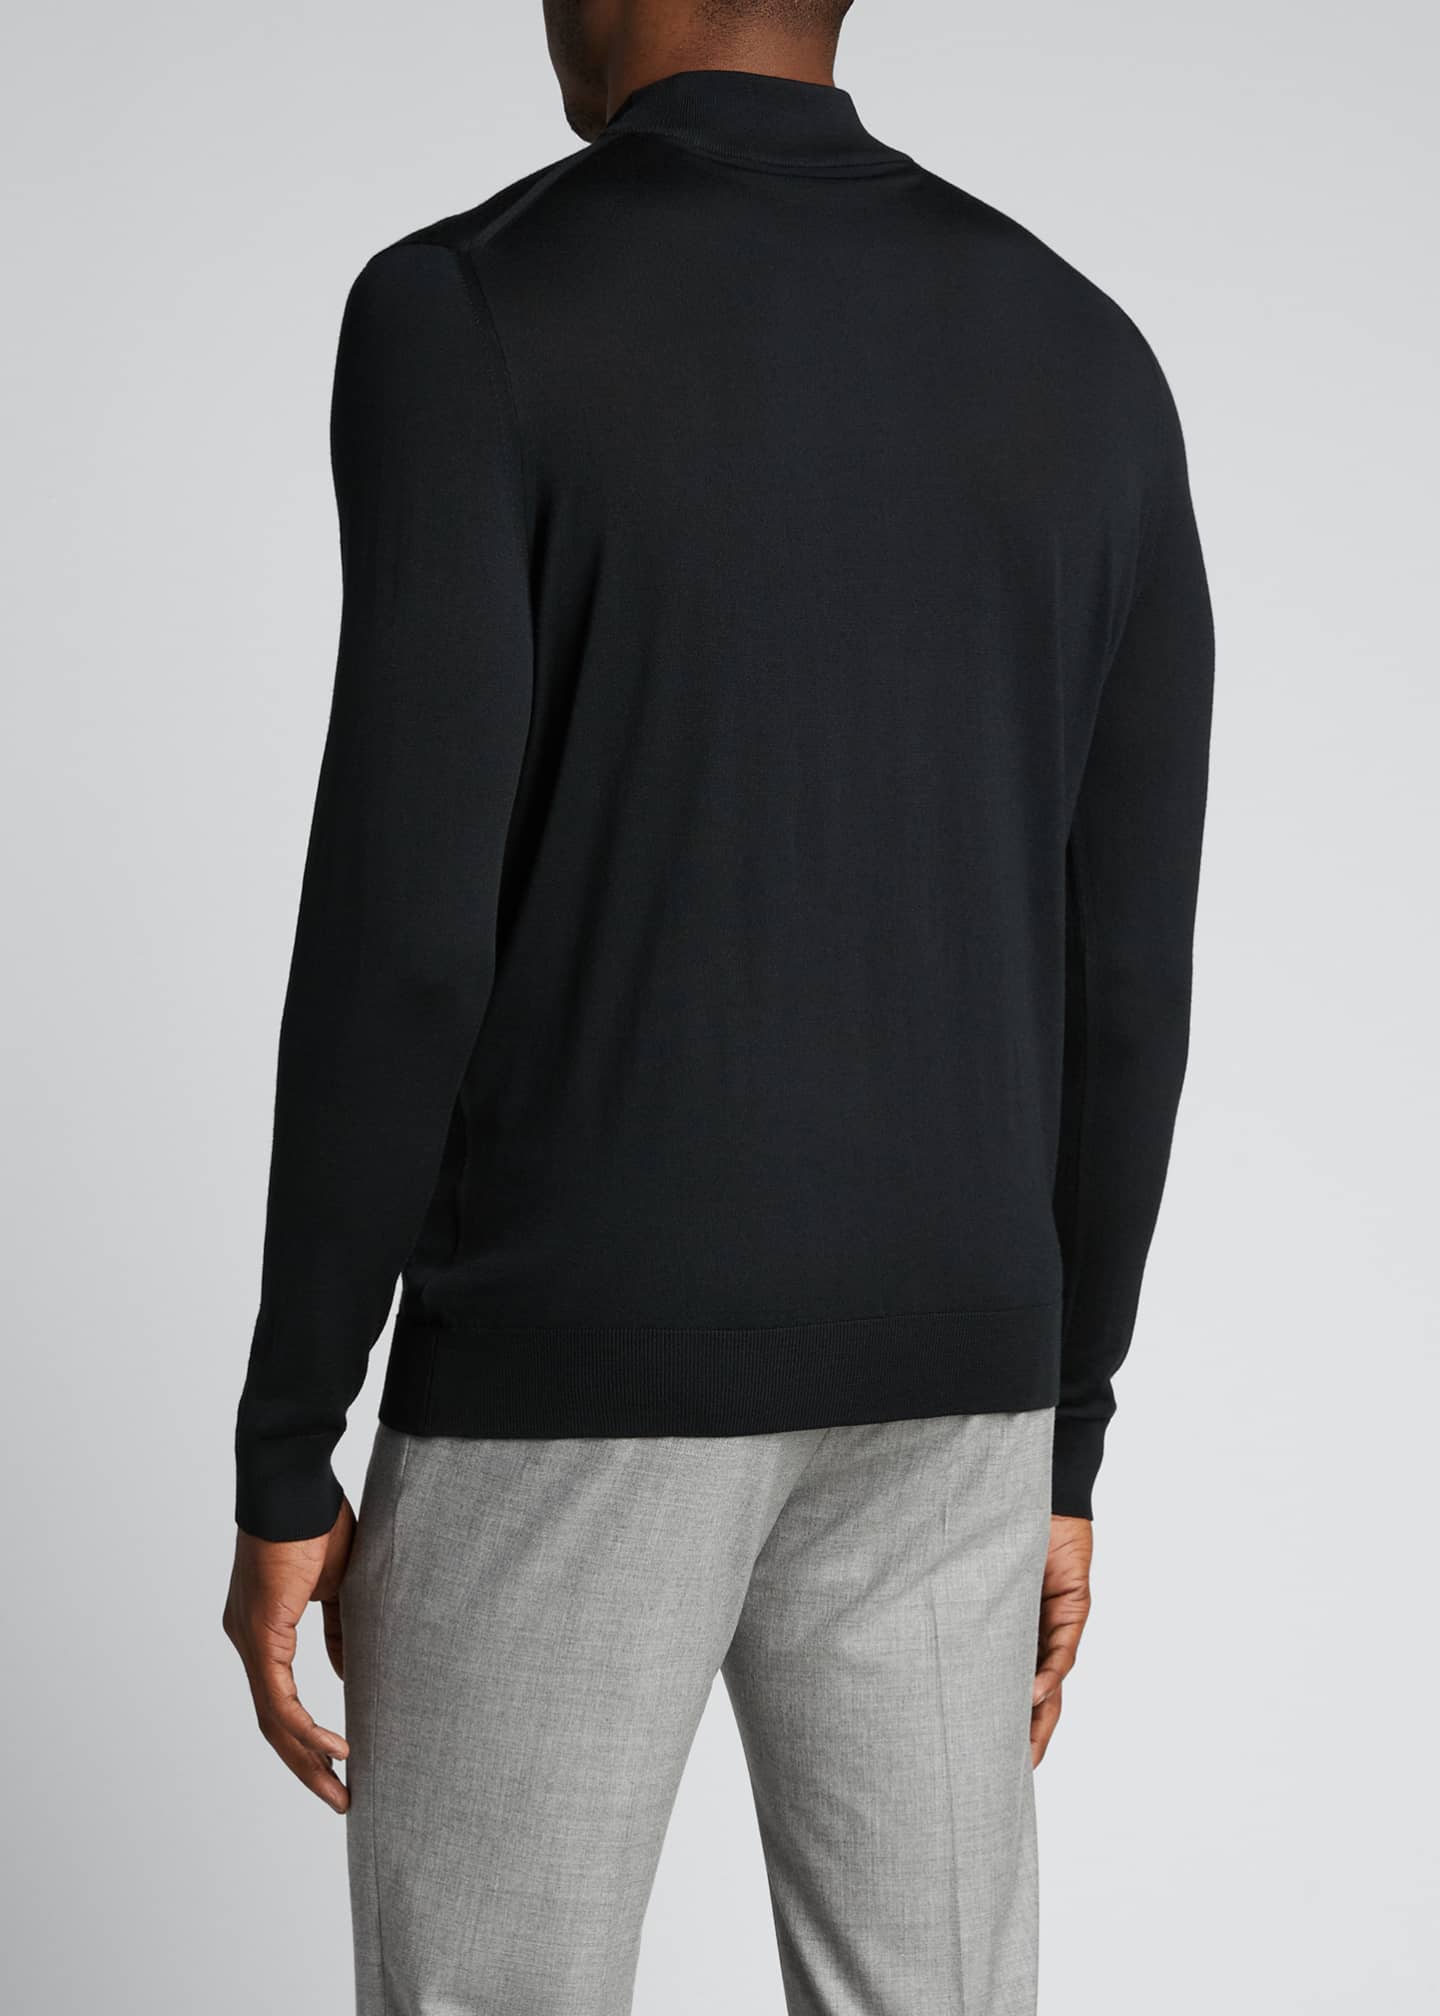 Kiton Men's Mock-Neck Wool Sweater - Bergdorf Goodman